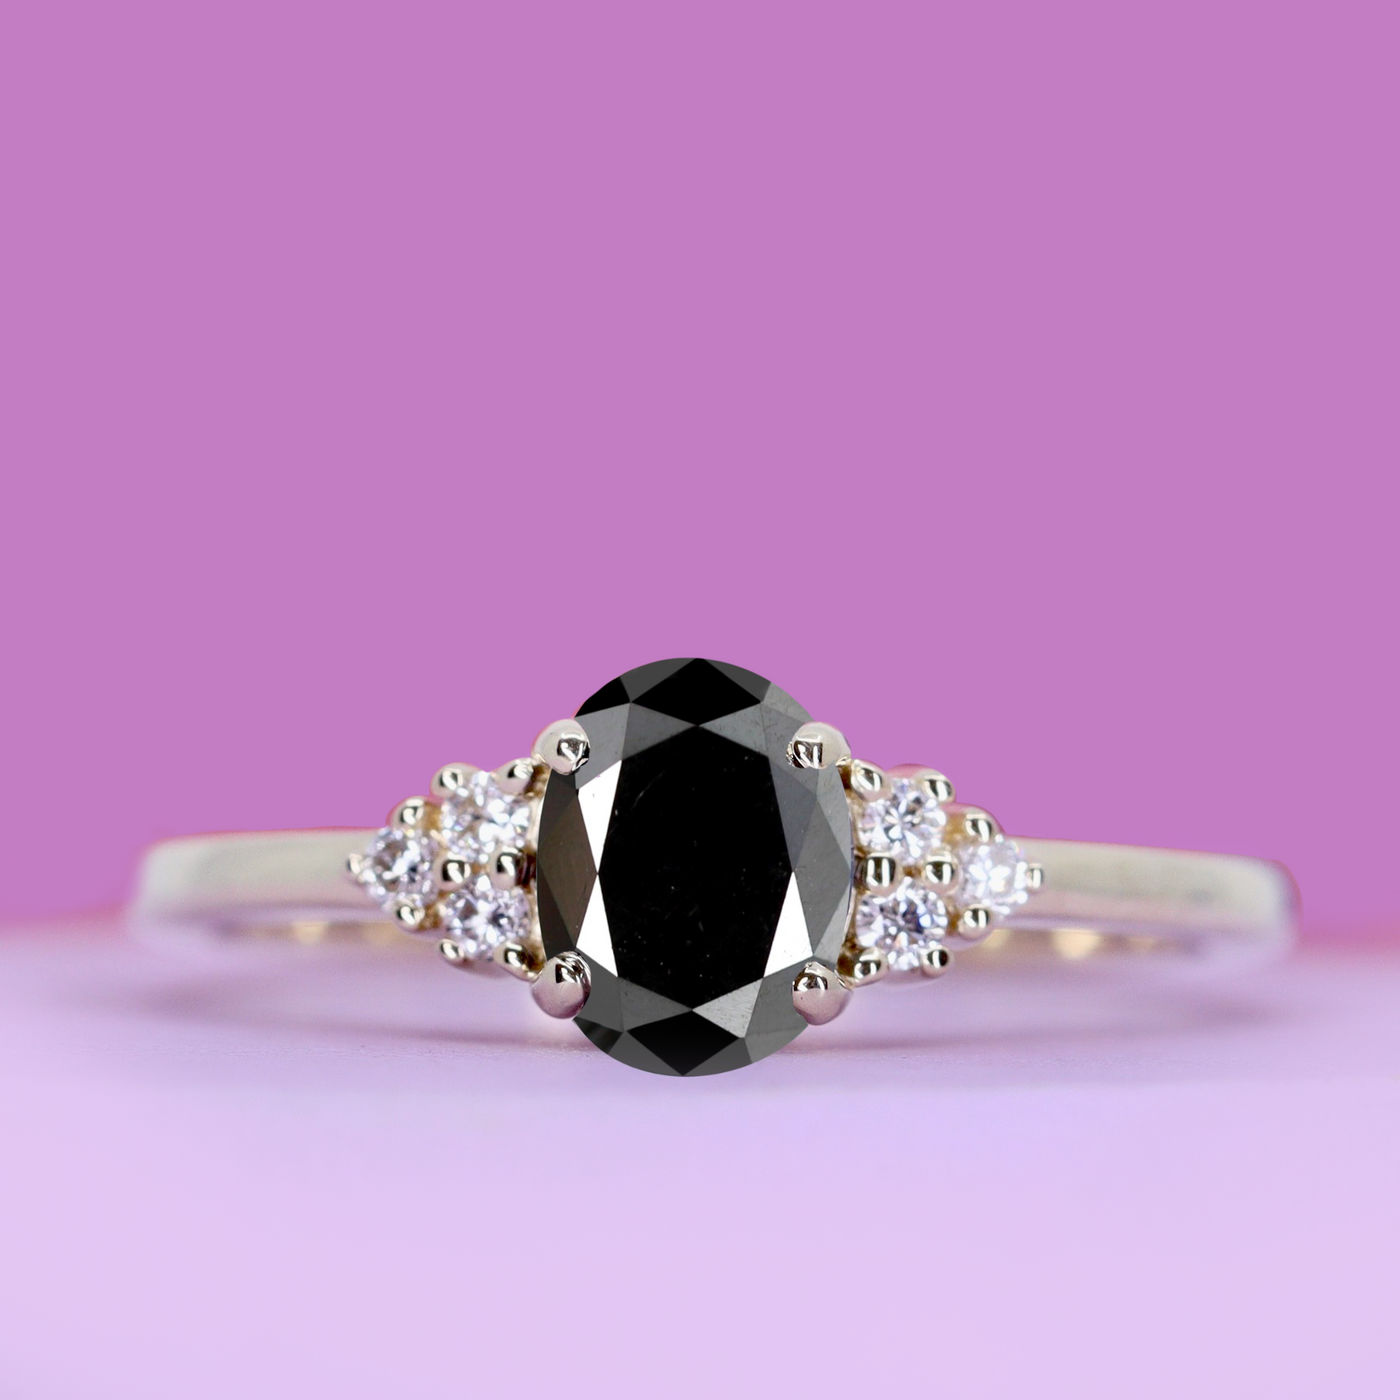 Henrietta - Oval Cut Black Diamond Engagement Ring with Round Brilliant Cut Diamond Side Stones - Custom Made-to-Order Design